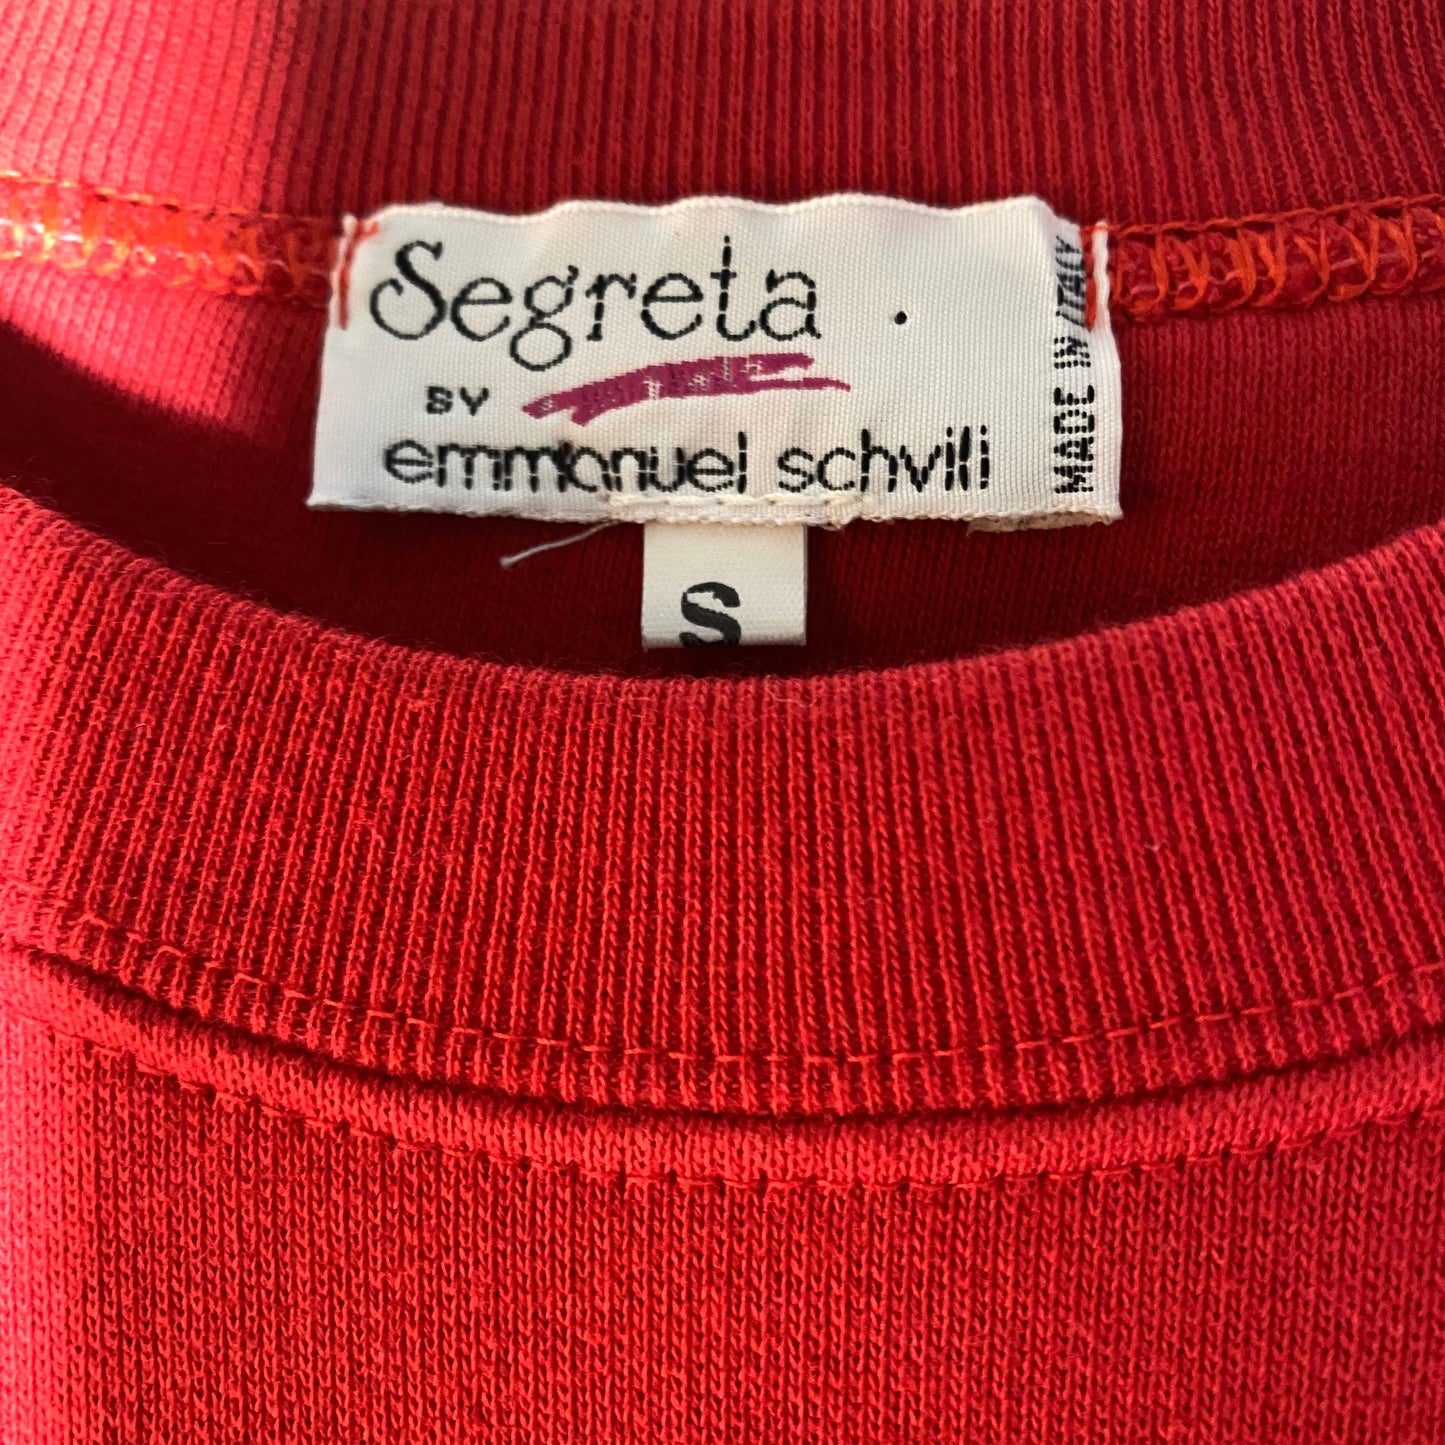 Segreta by Schvili Tom & Jerry camera embroidered sweatshirt, mint condition sz S oversized fit